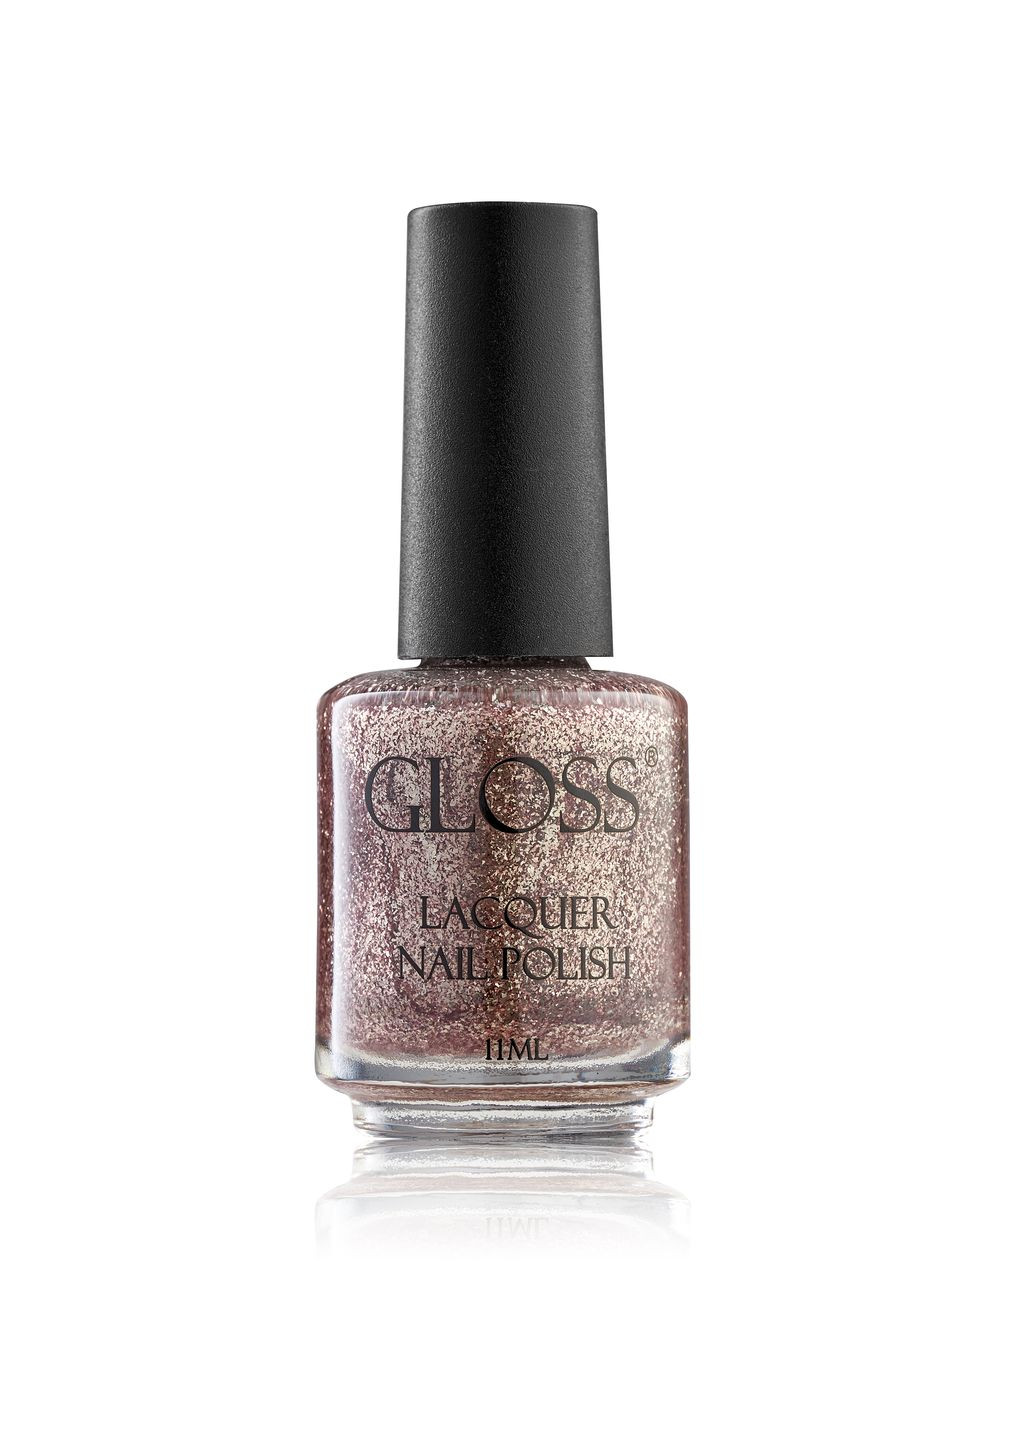 Лак для ногтей GLOSS 013, 11 мл Gloss Company lacquer nail polish (276255629)